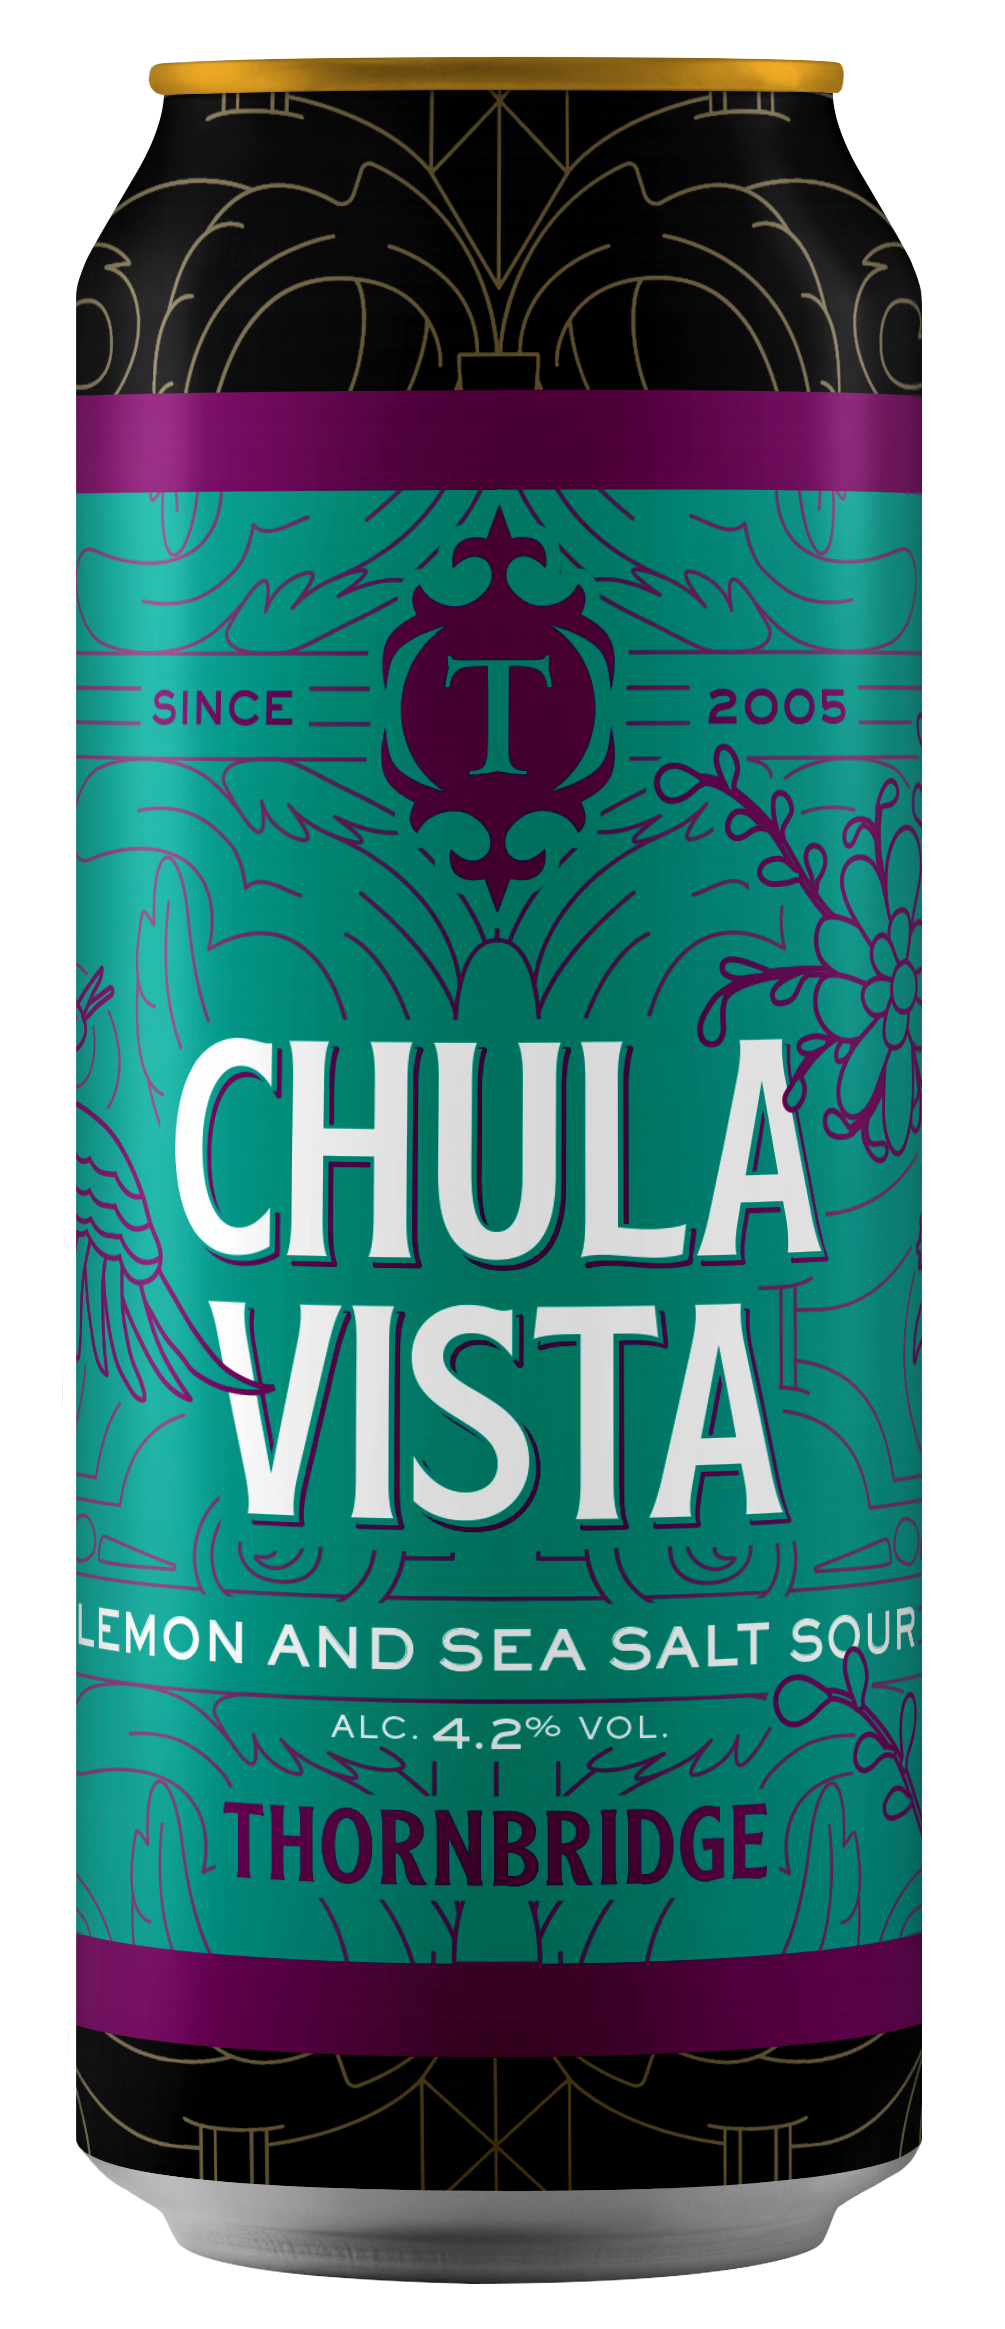 Thornbridge Chula Vista Lemon and Sea Salt Sour